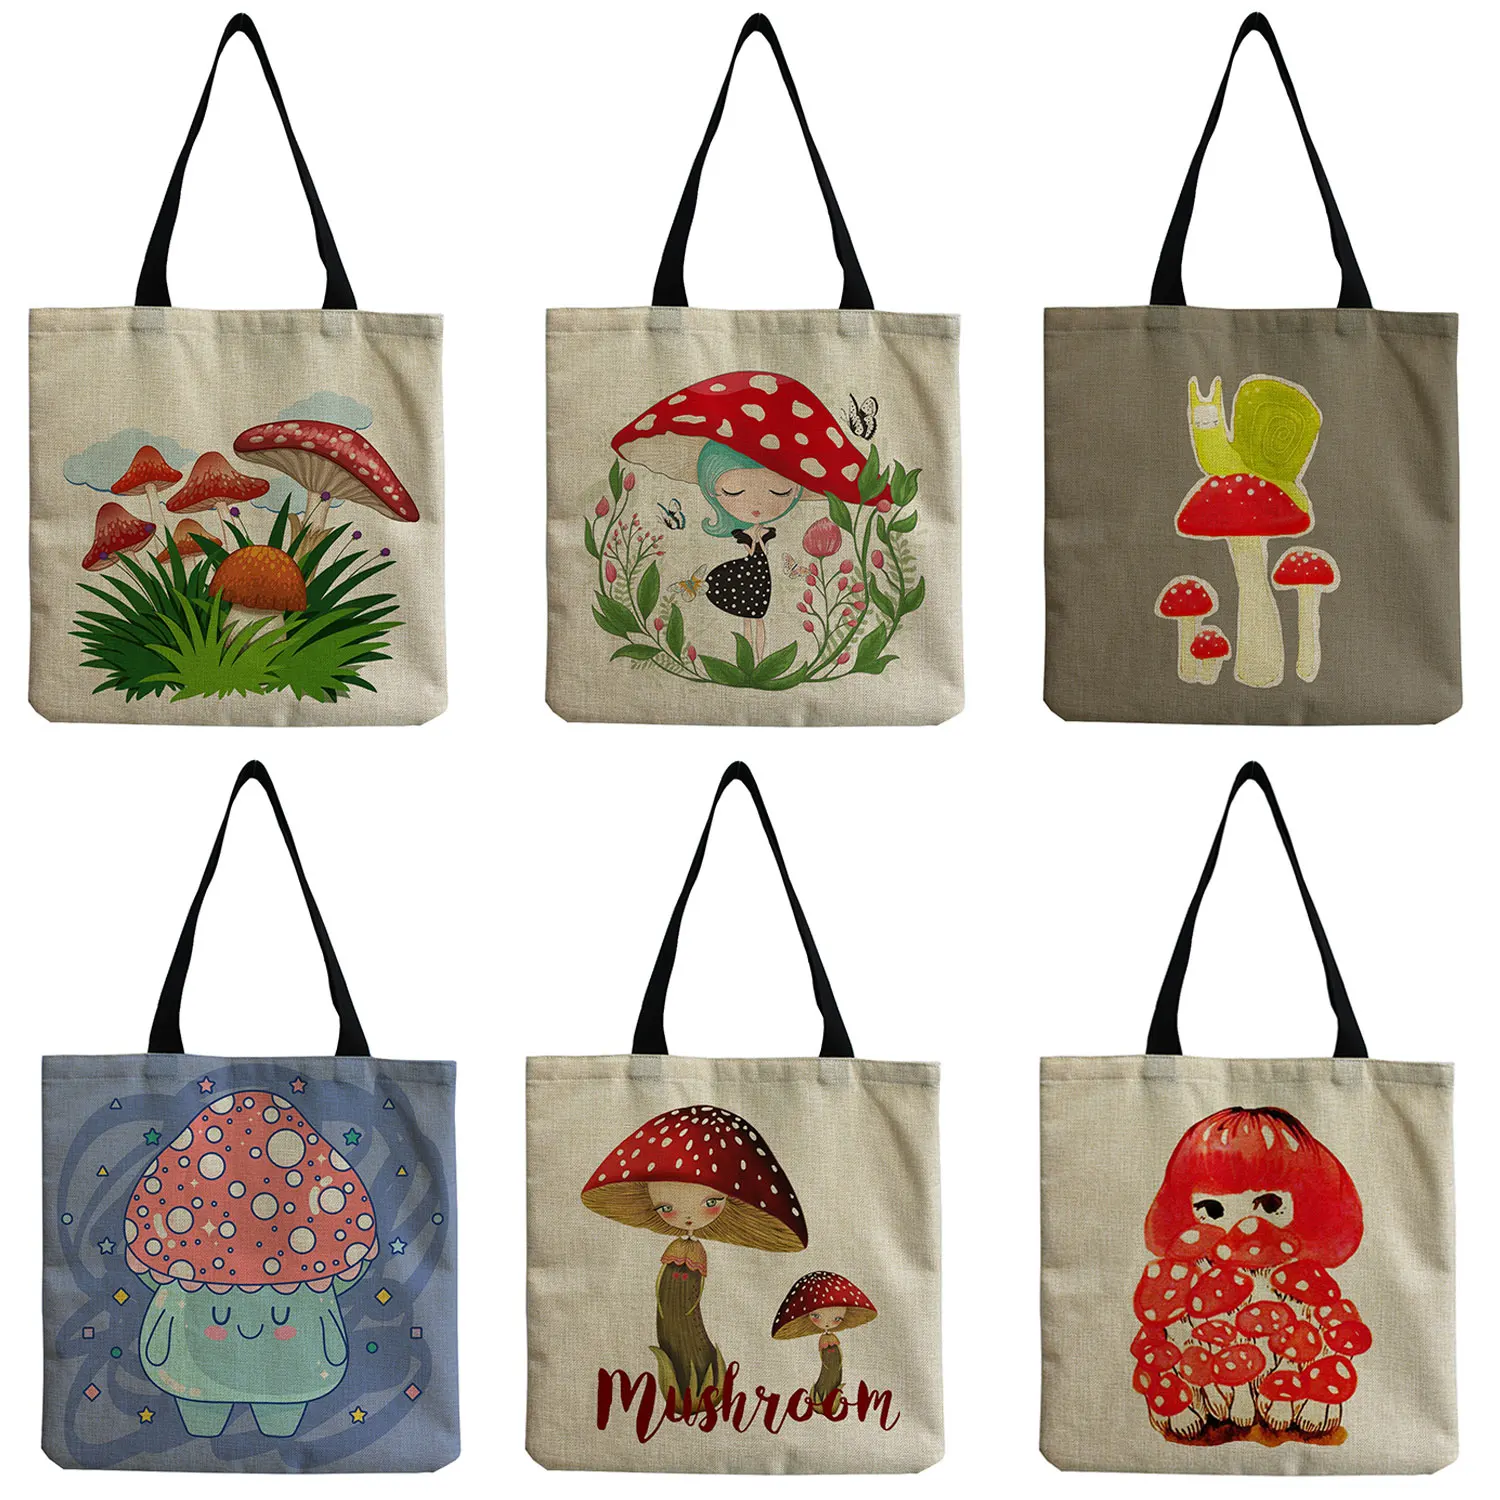 Creativity Personality Plant Mushroom Shoulder Bag Art Refreshing Floral Tote Bag Eco Protection Large Capacity Women Handbag